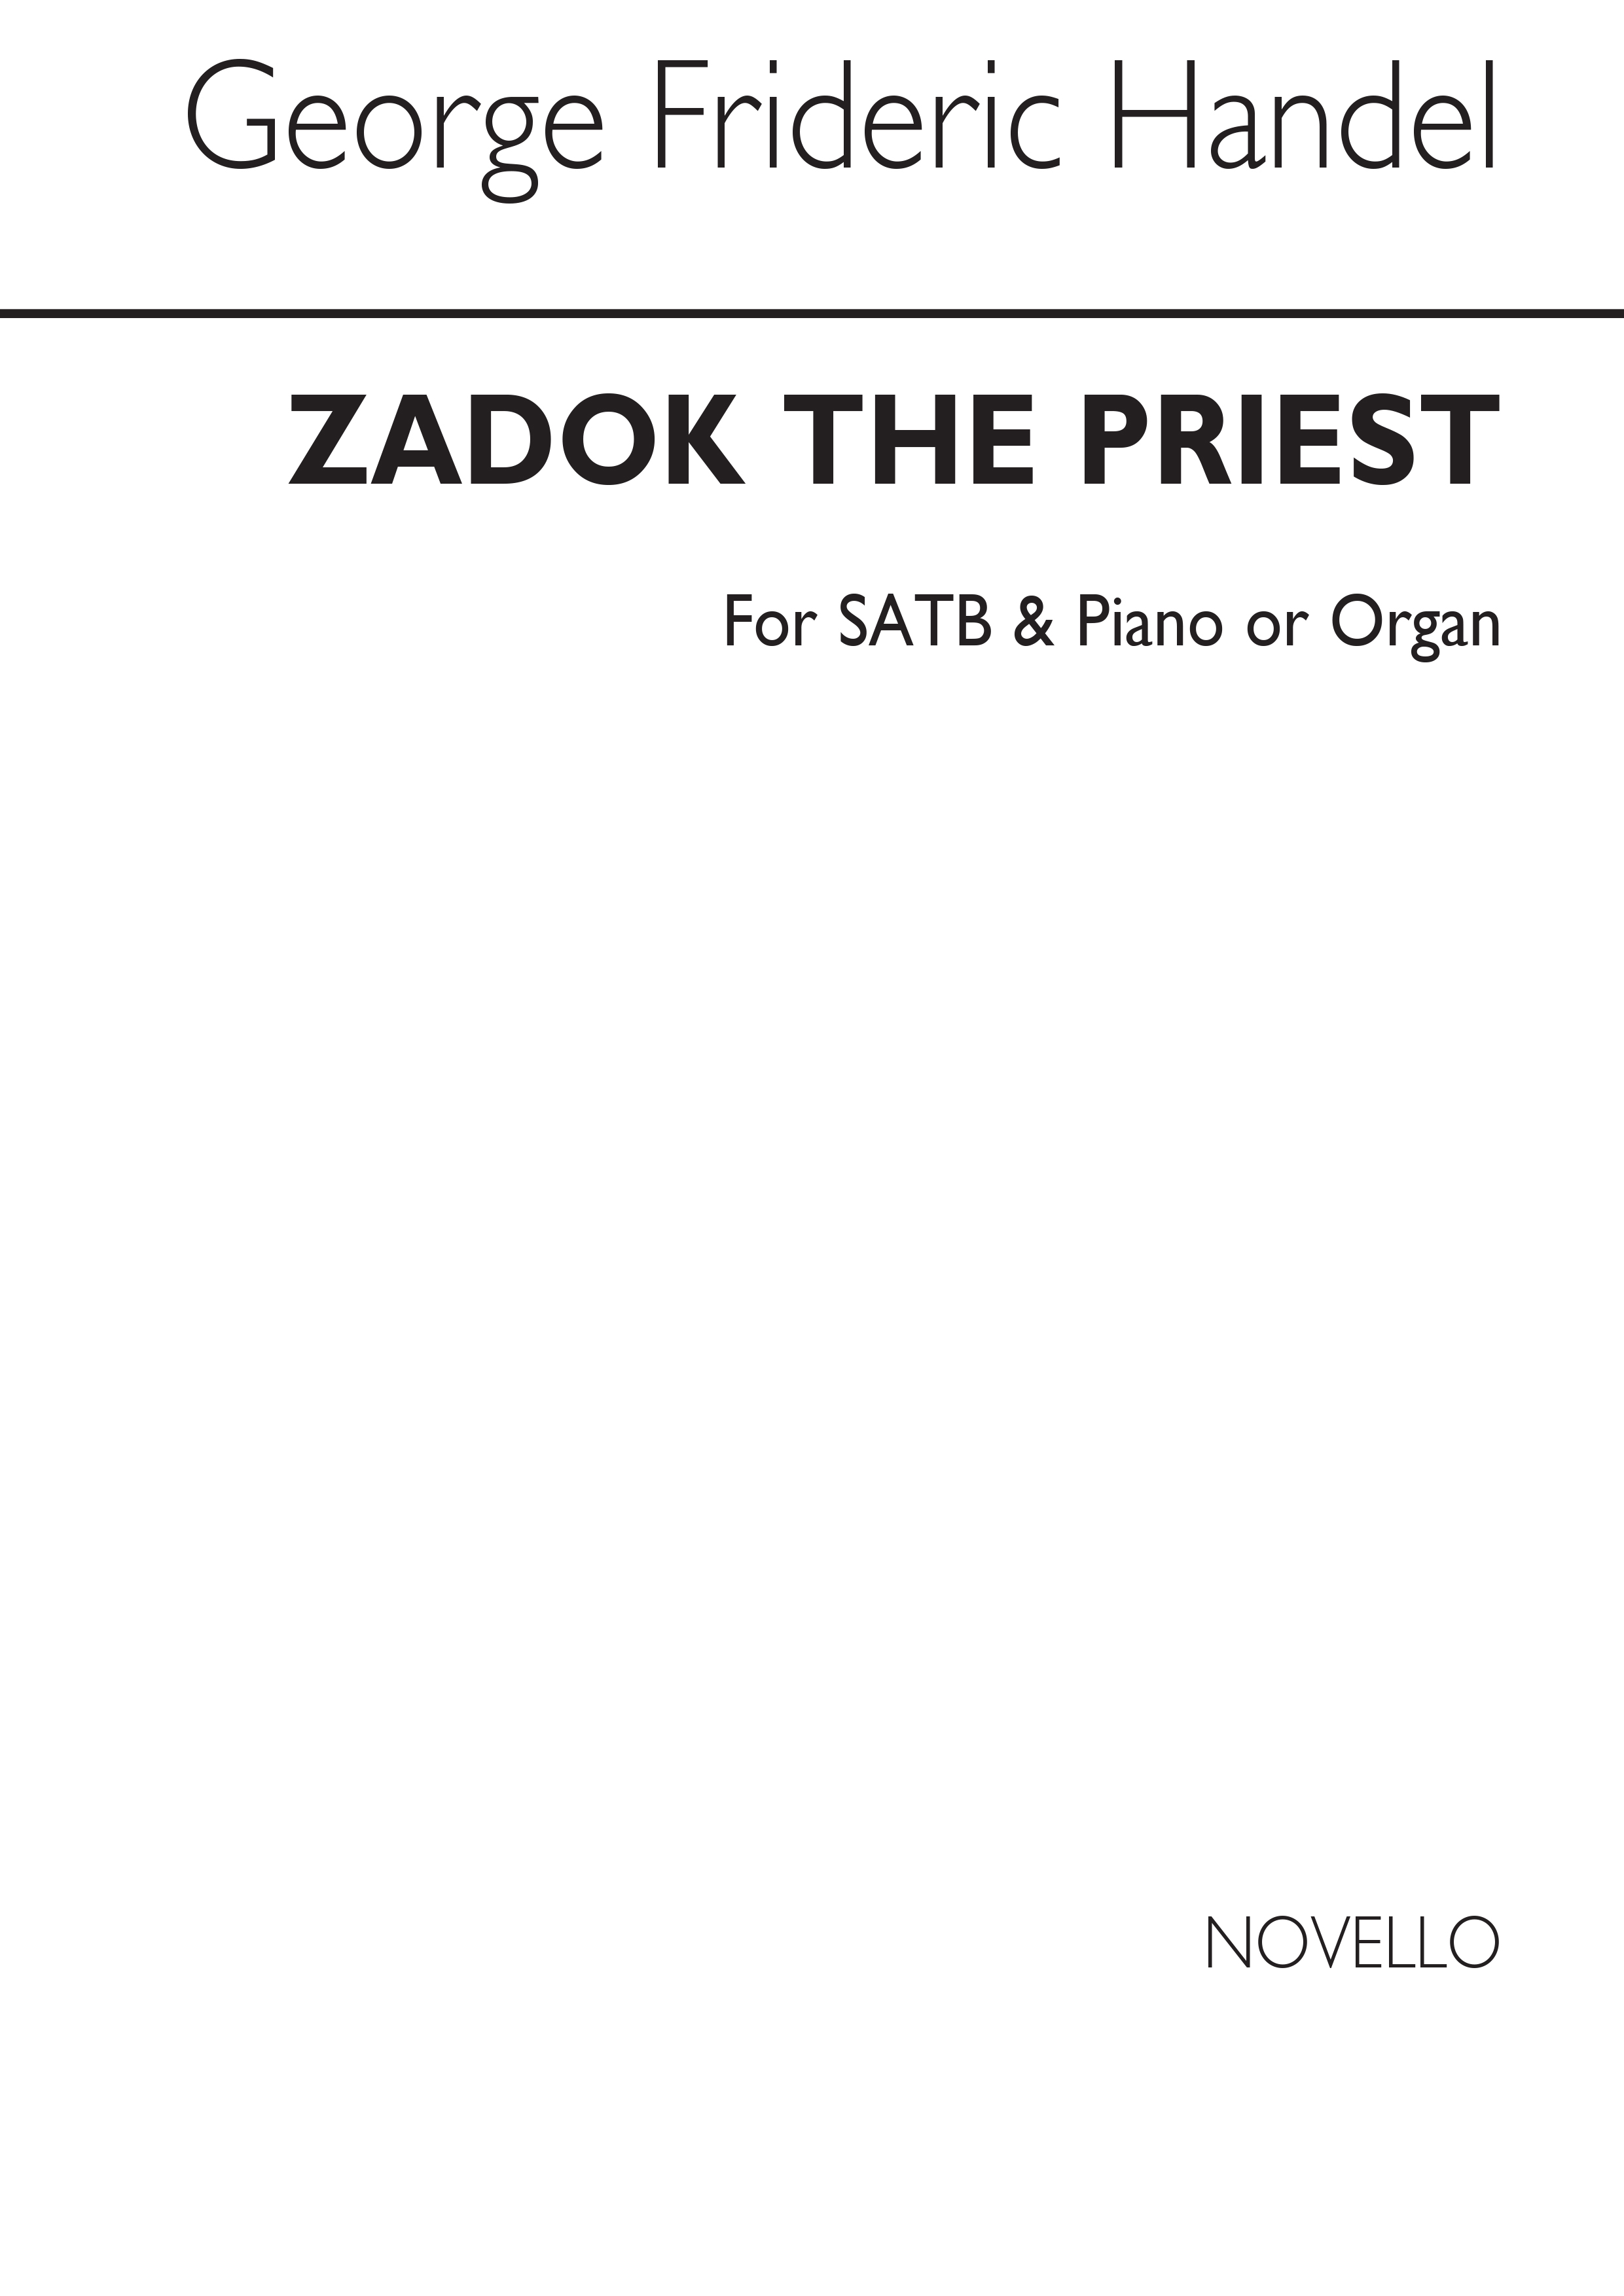 Georg Friedrich Hndel: Coronation Anthem No.1 'Zadok The Priest' SSAATBB: SATB: